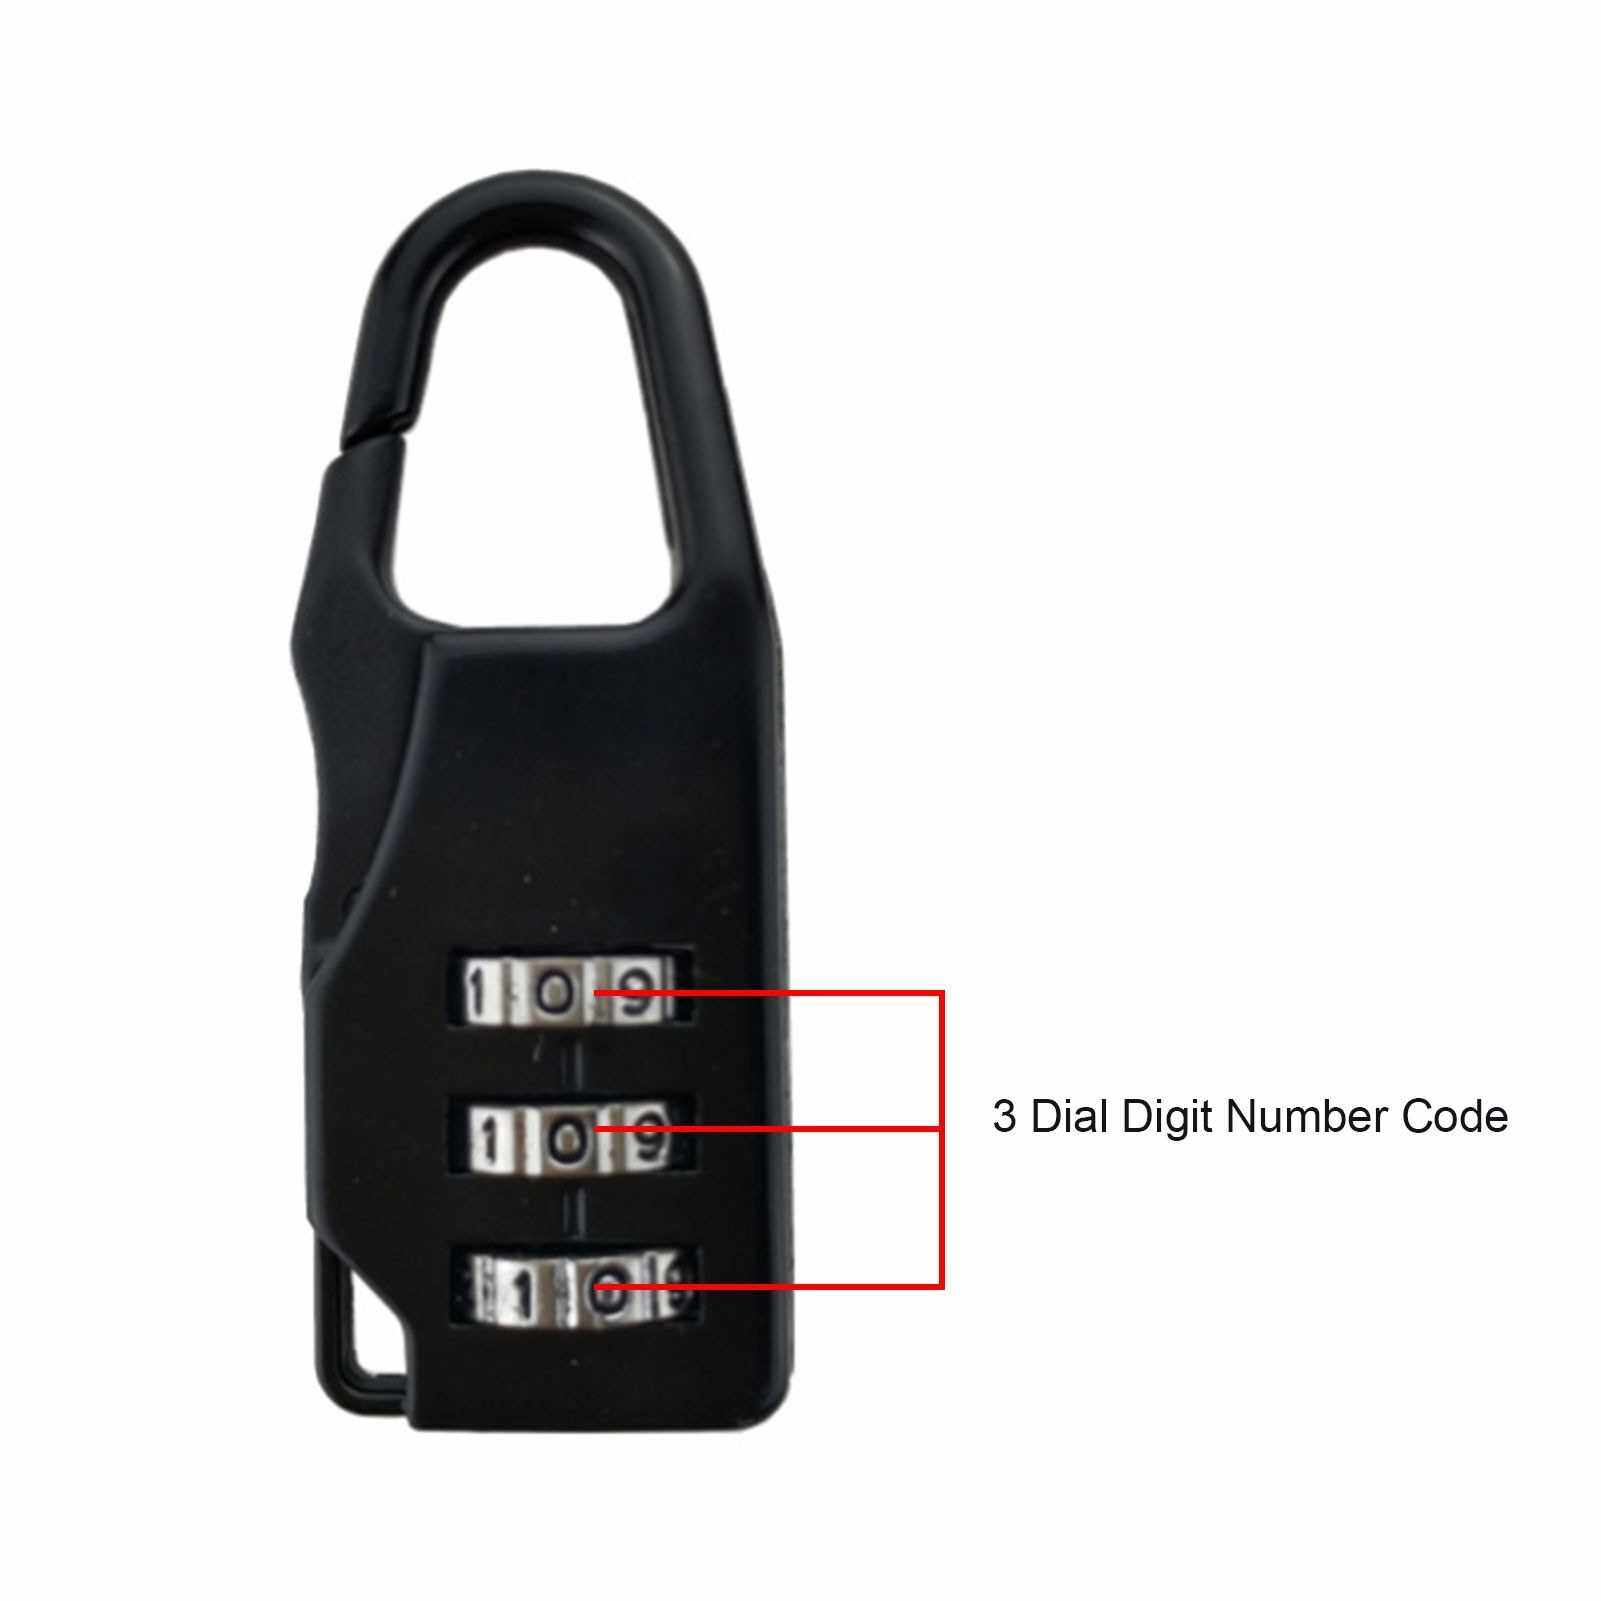 BEST SELLER 3 Dial Digit Number Code Password Combination Padlock Travel Security Safe Lock (Silver)